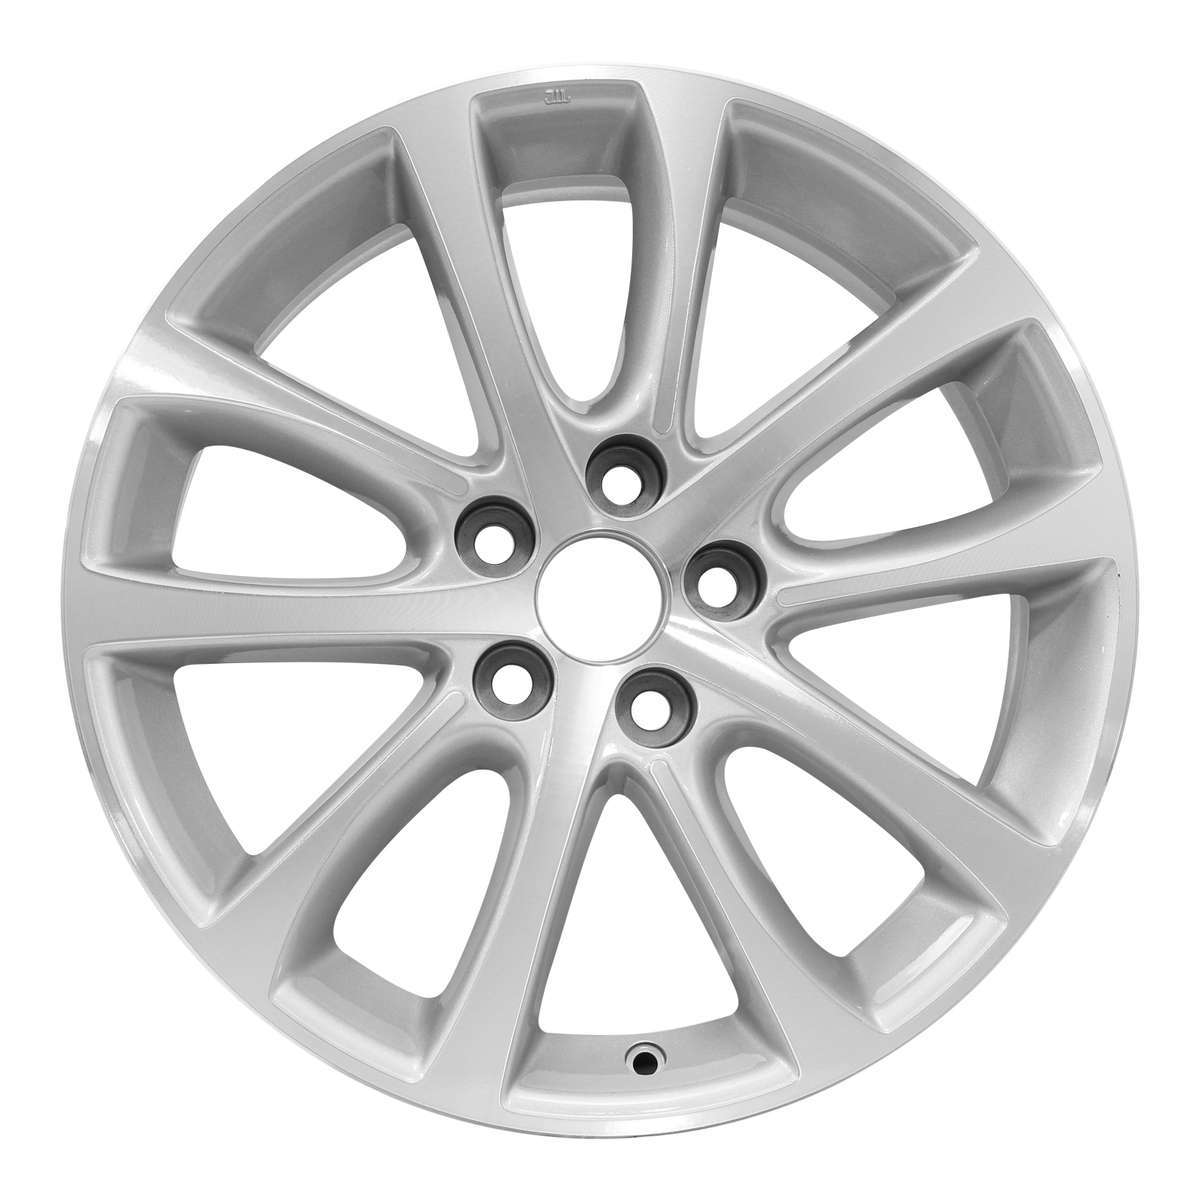 2014 Toyota Avalon New 18" Replacement Wheel Rim RW69624MS